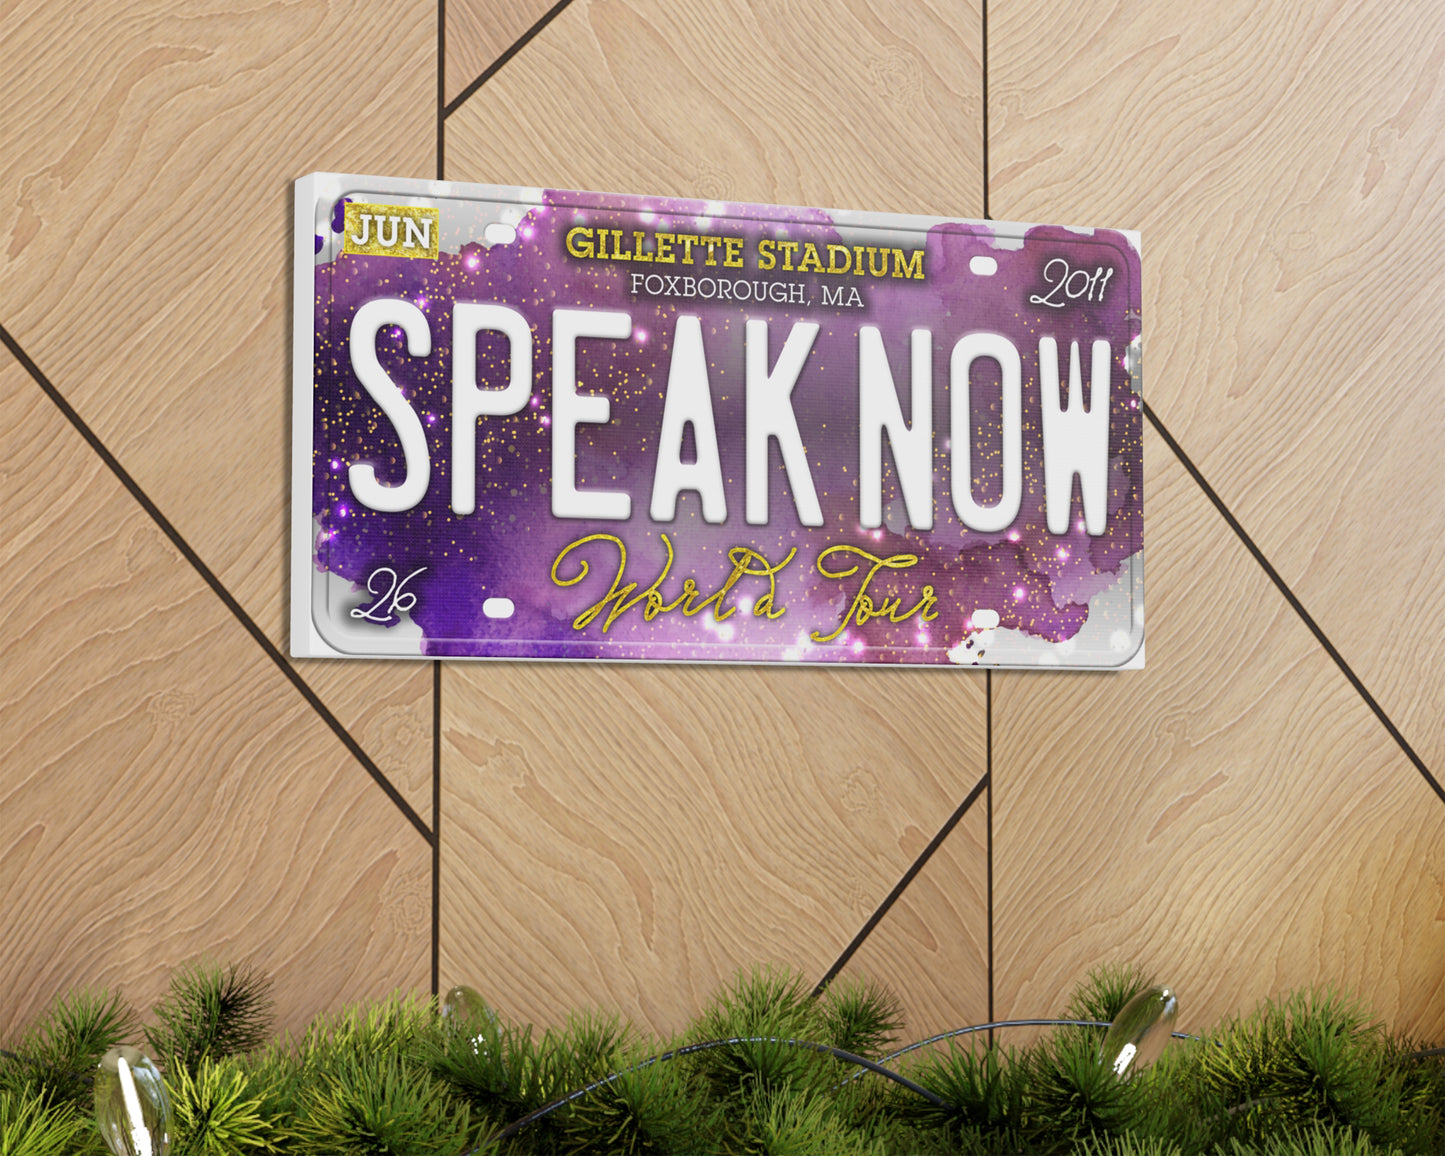 Speak Now World Tour canvas wall decor